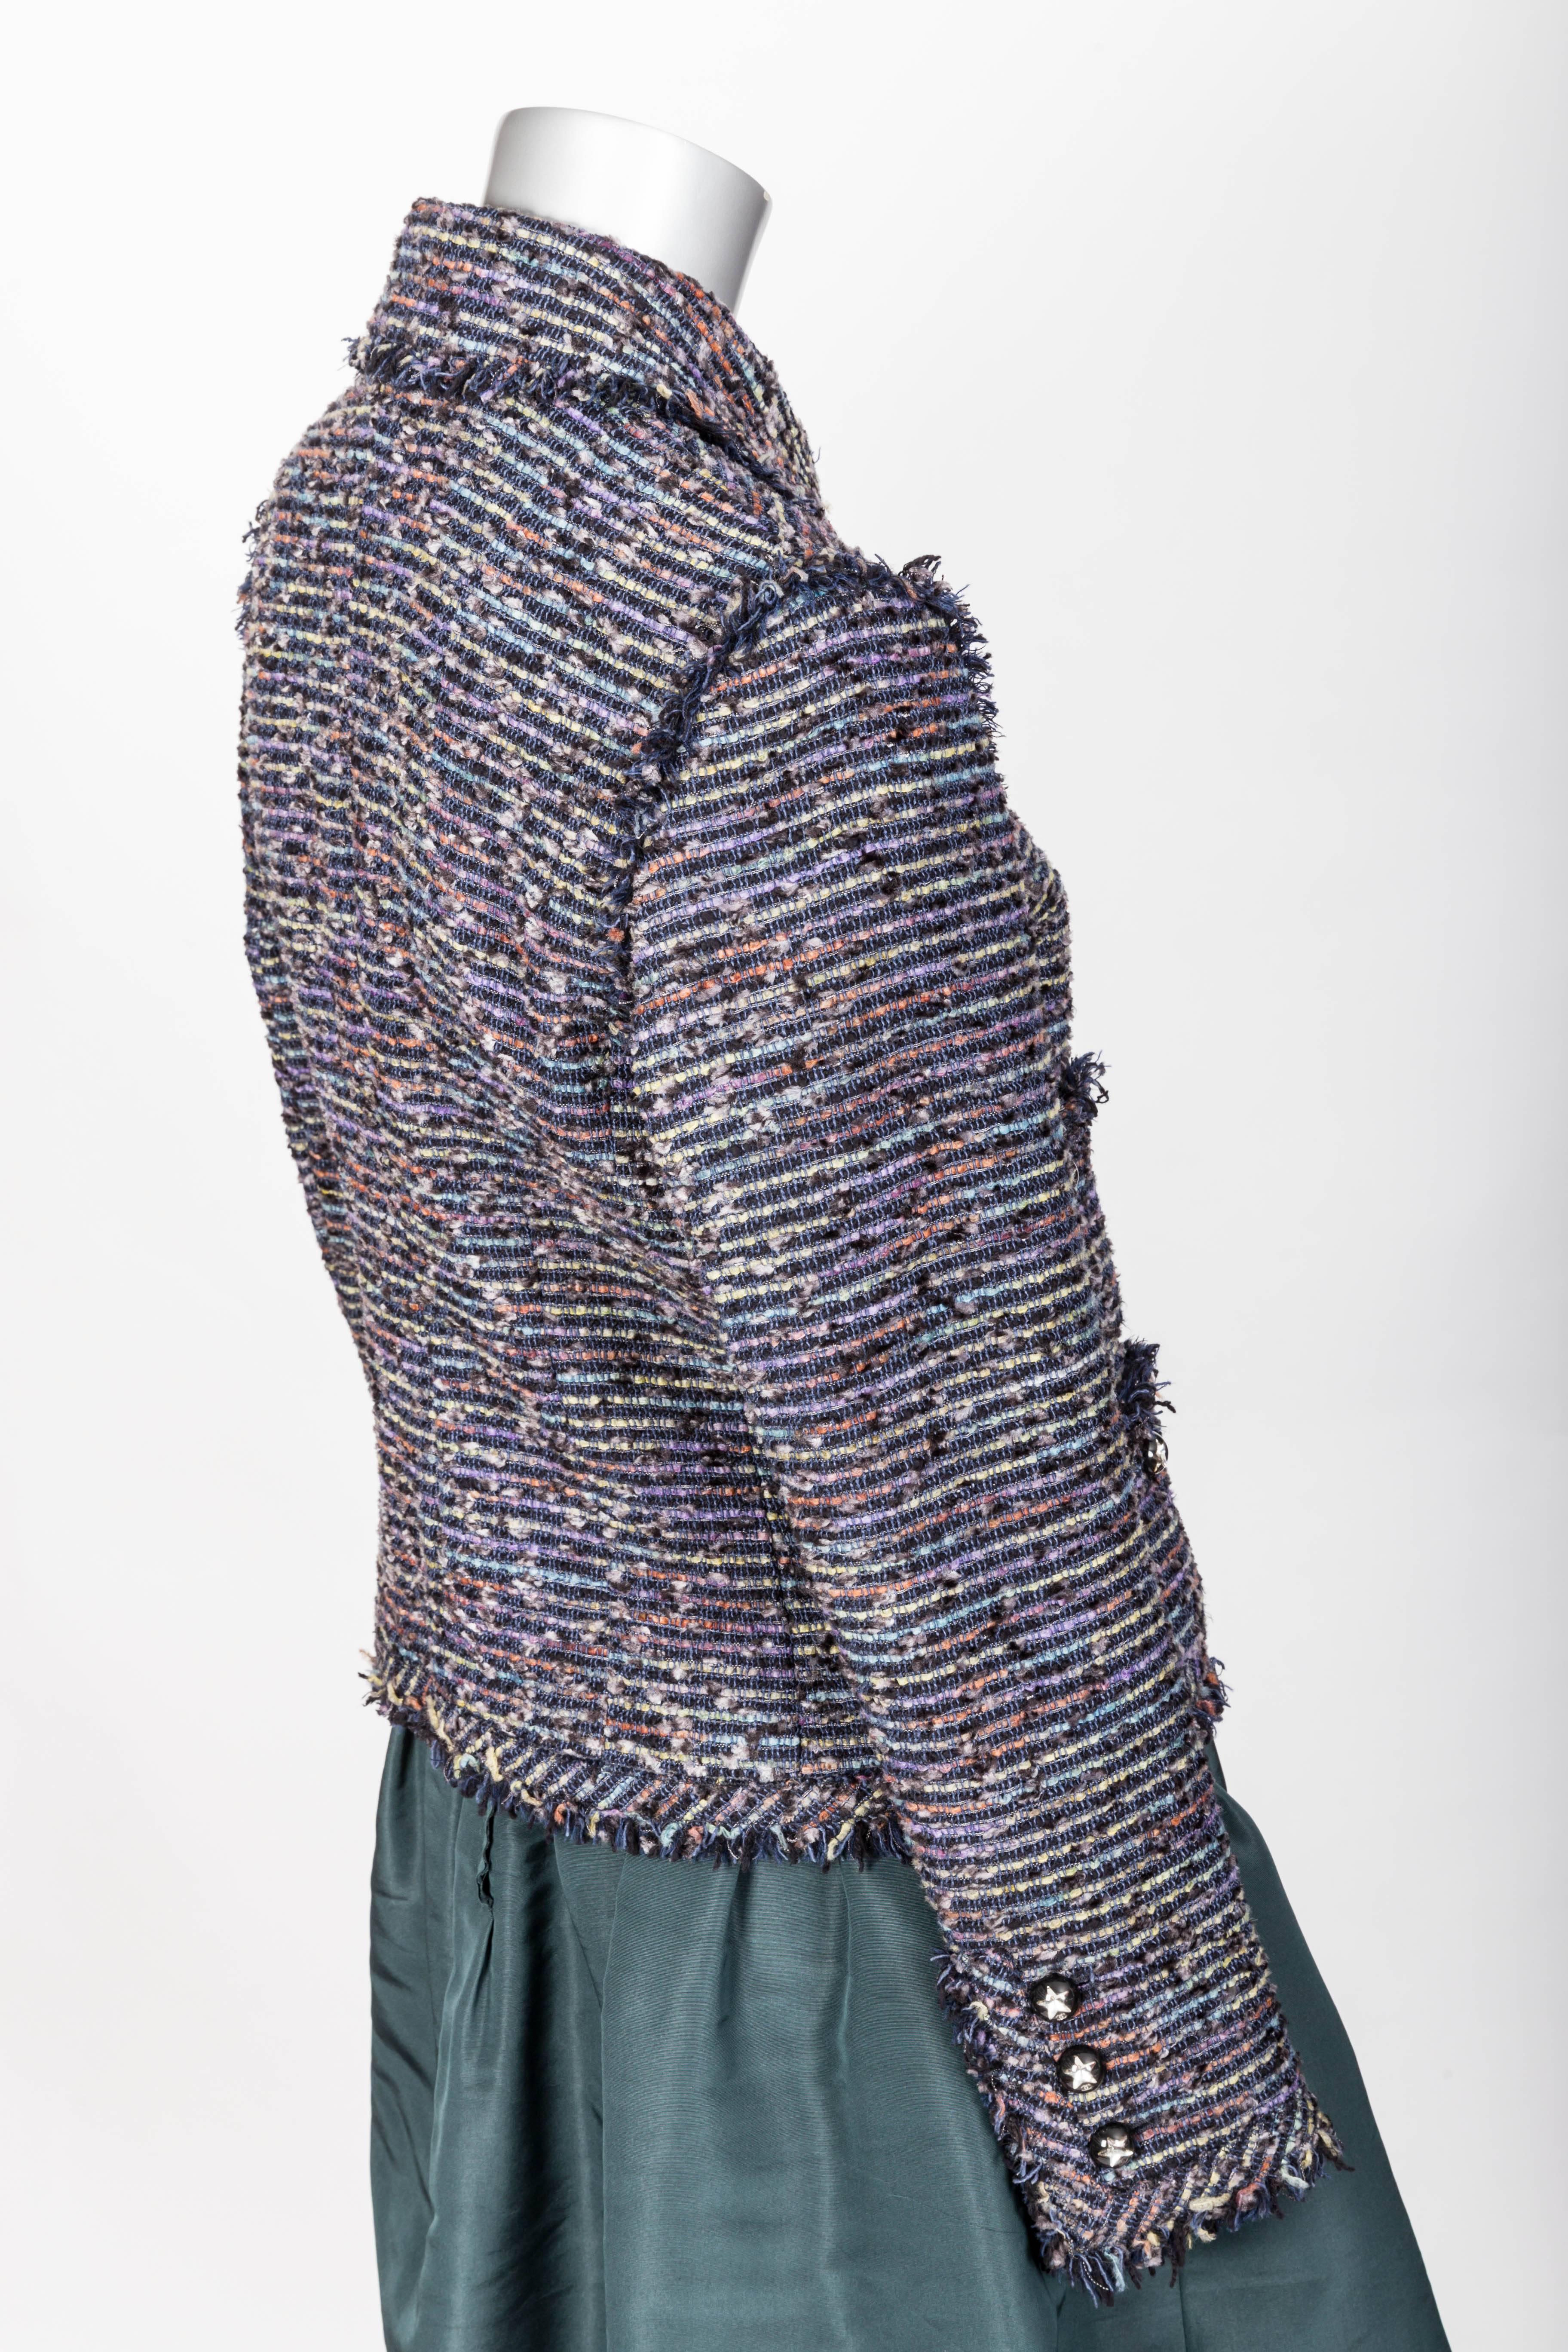 Chanel Tweed Jacket with Fringe Trim FR 40 / US 8 2